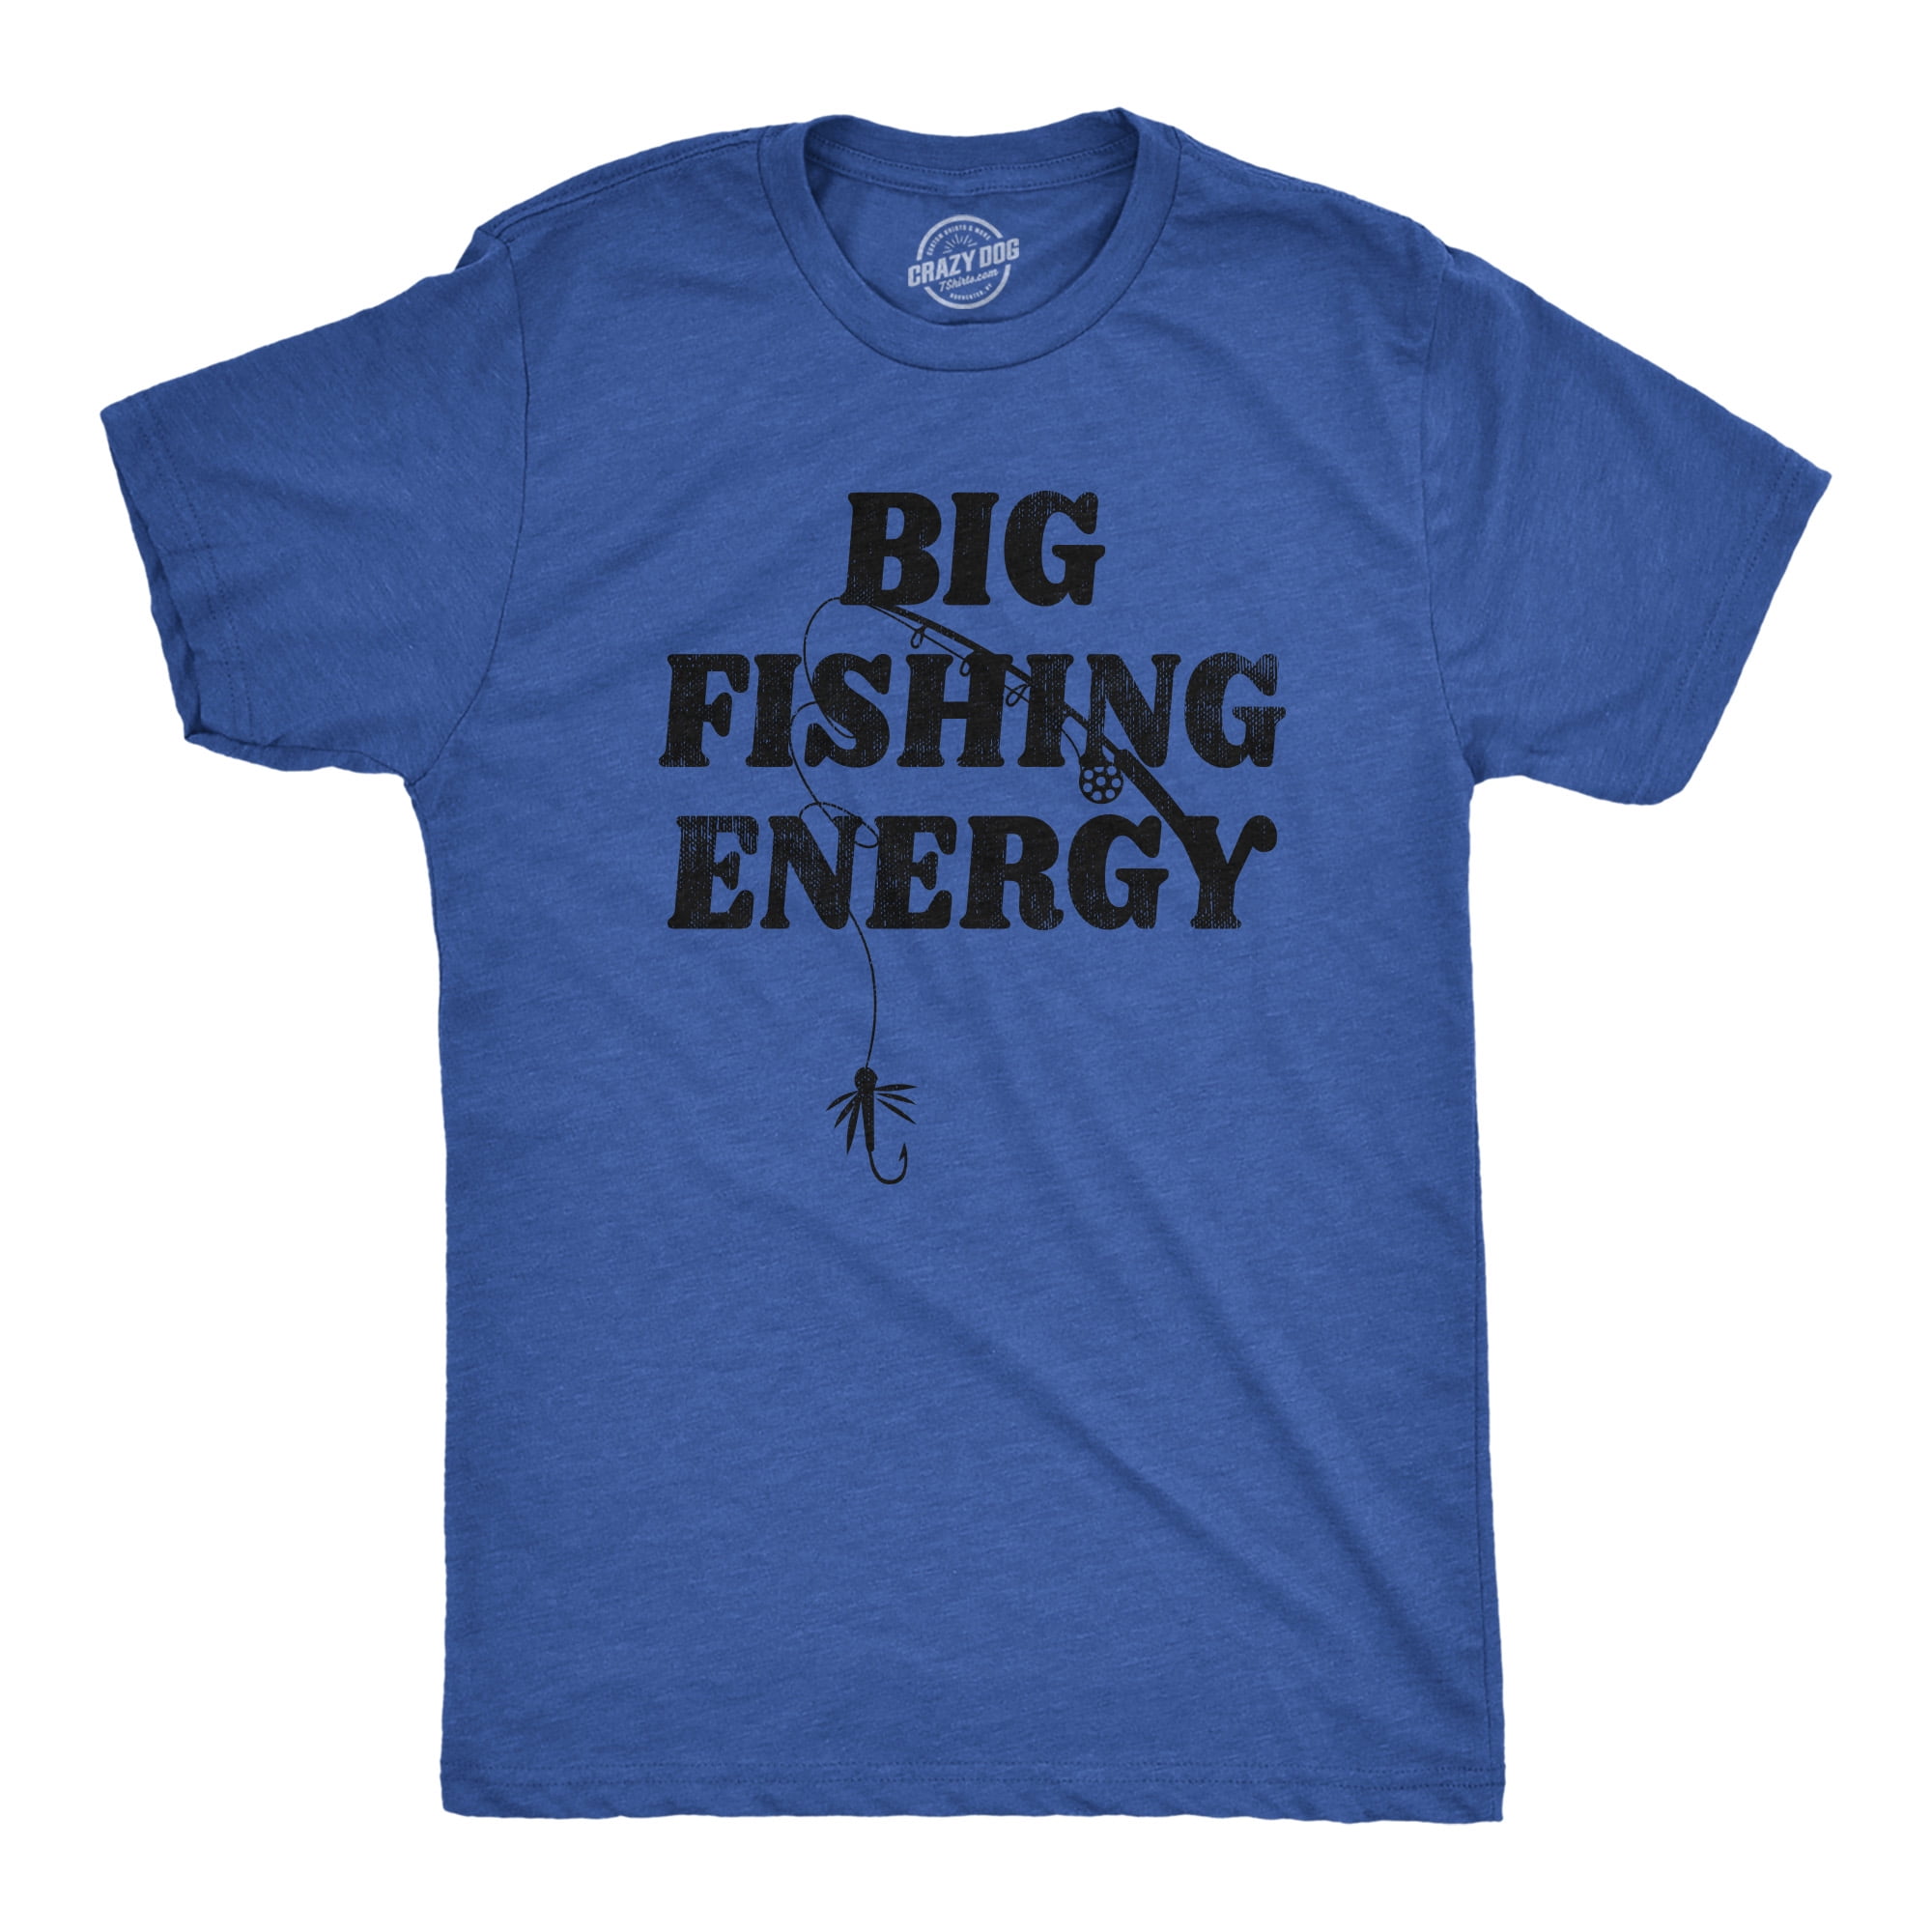 WTF Wheres the Fish Funny Fishing Fisherman Mens T-Shirt 100% Cotton